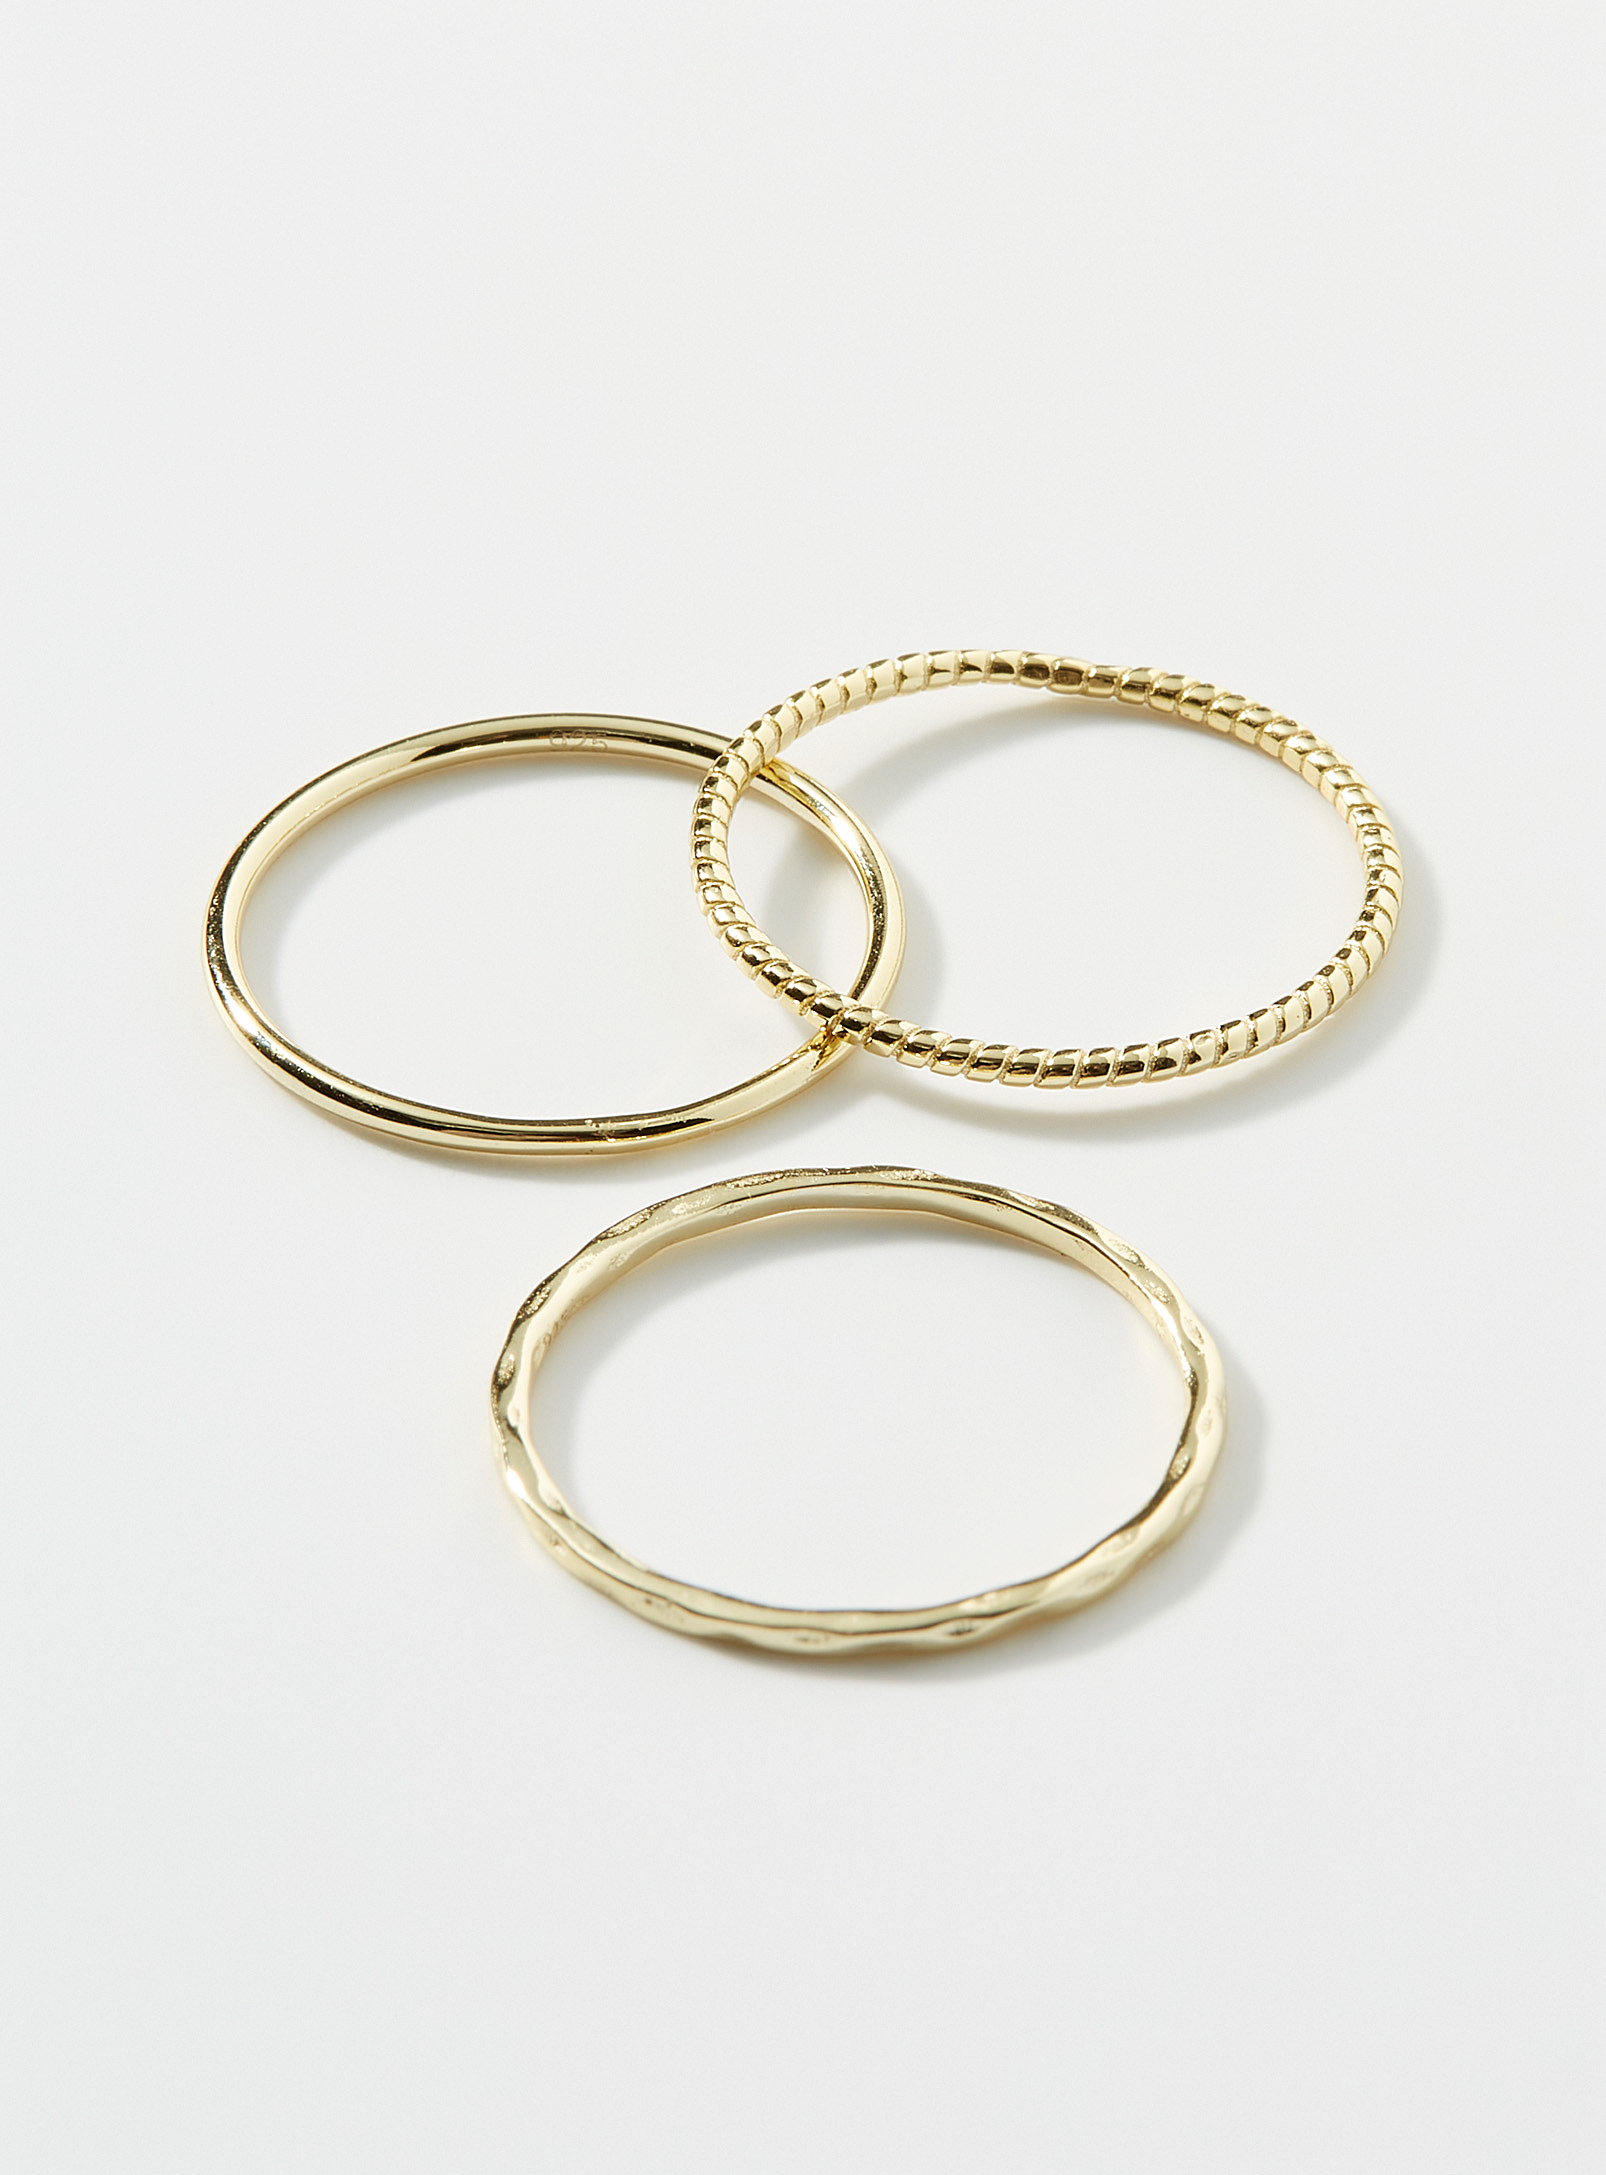 Simons - Women's Gold minimalist rings Set of 3